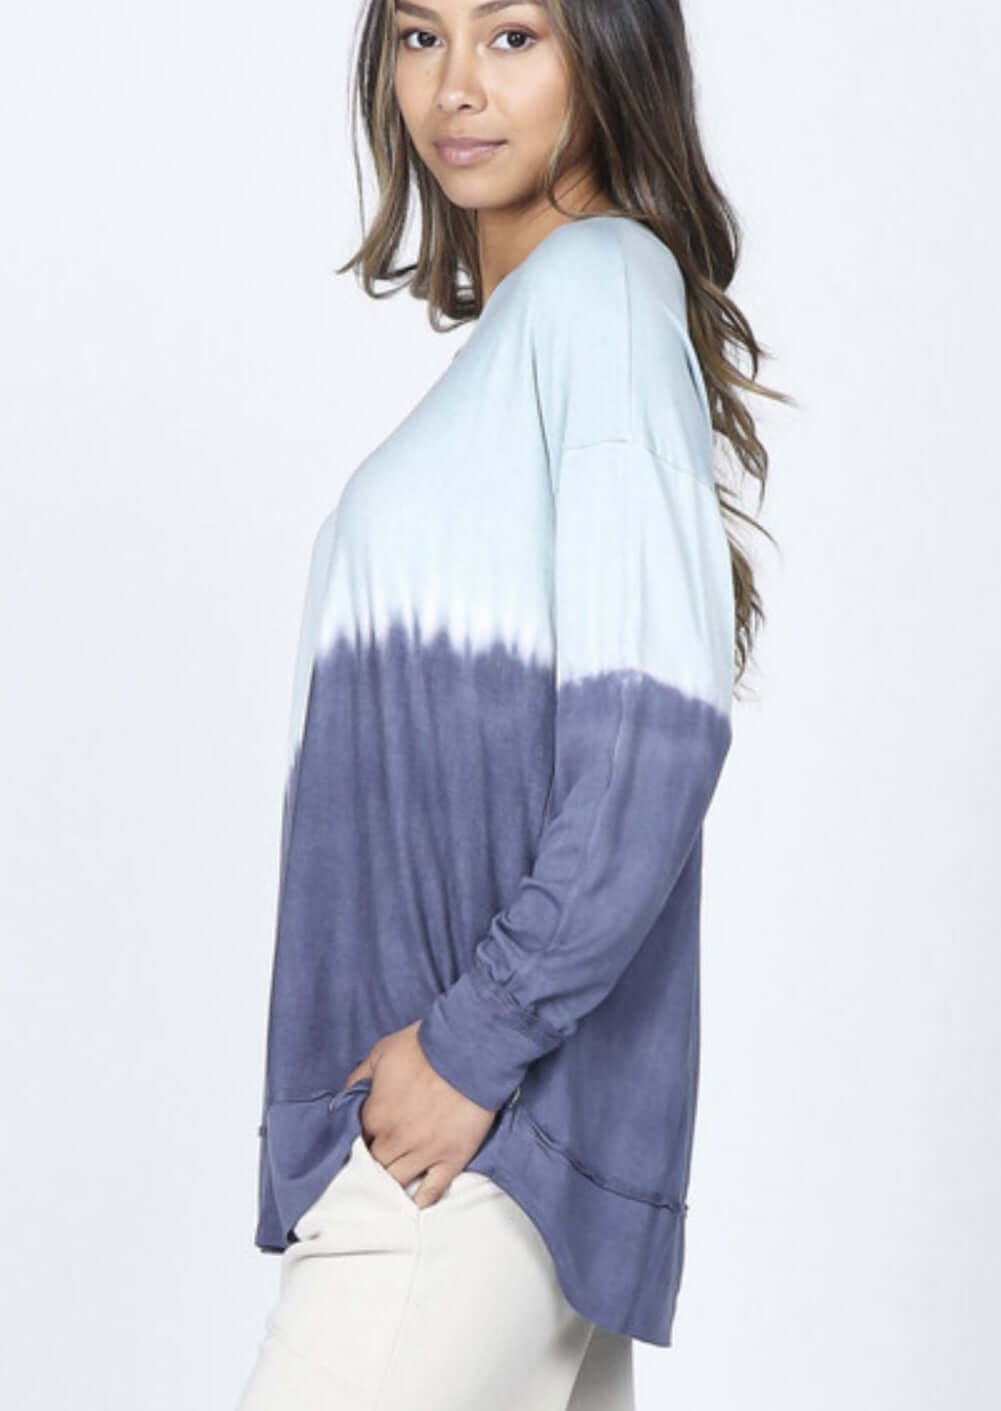 USA Made M. Rena Marine Blue & Denim Blue French Terry Tie Dye Sweatshirt |  M. Rena Style# S4800 | Women's Made in America Clothing